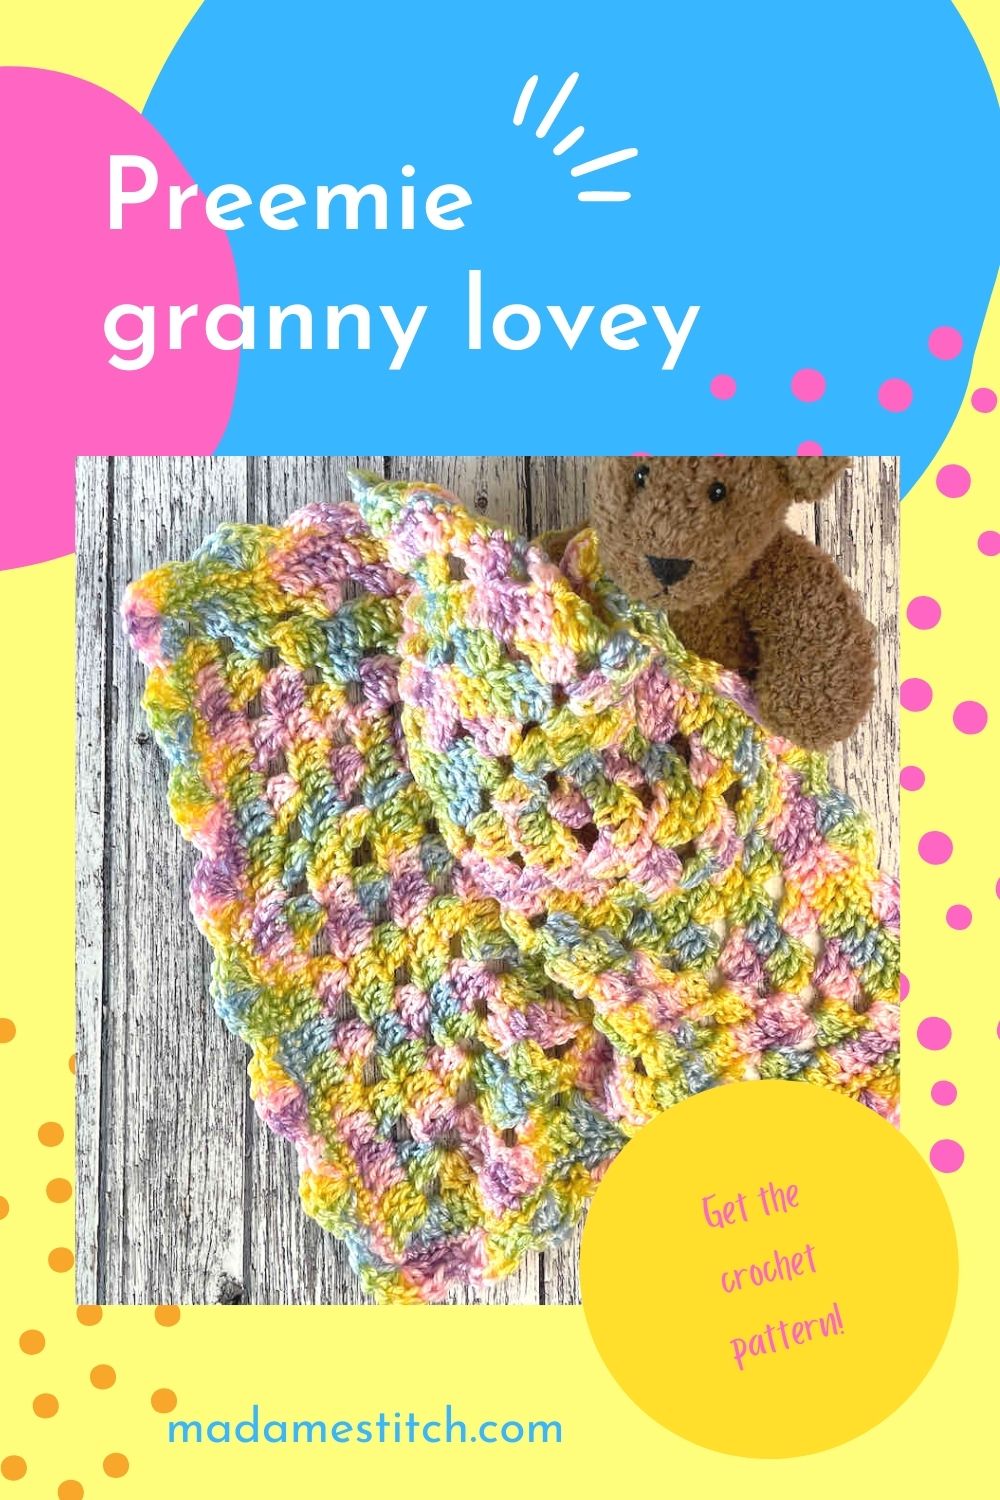 Preemie granny square lovey baby blanket crochet pattern by MadameStitch